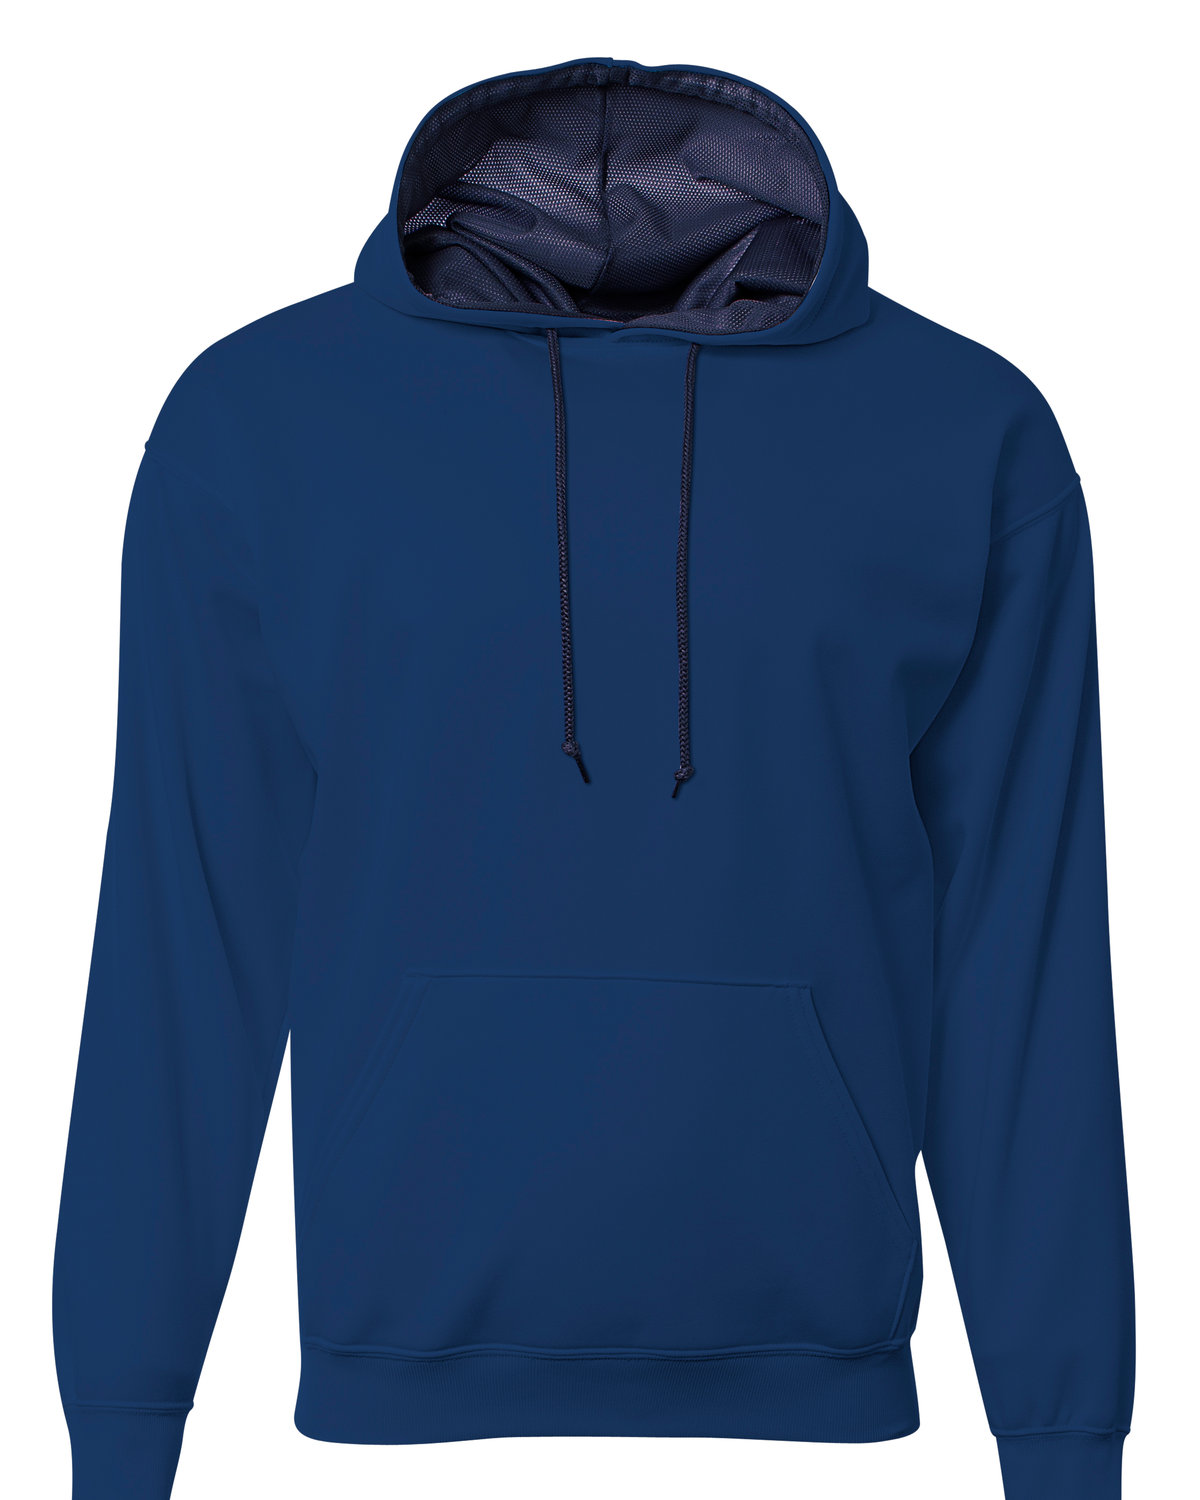 A4 Men's Sprint Tech Fleece Hooded Sweatshirt NAVY 